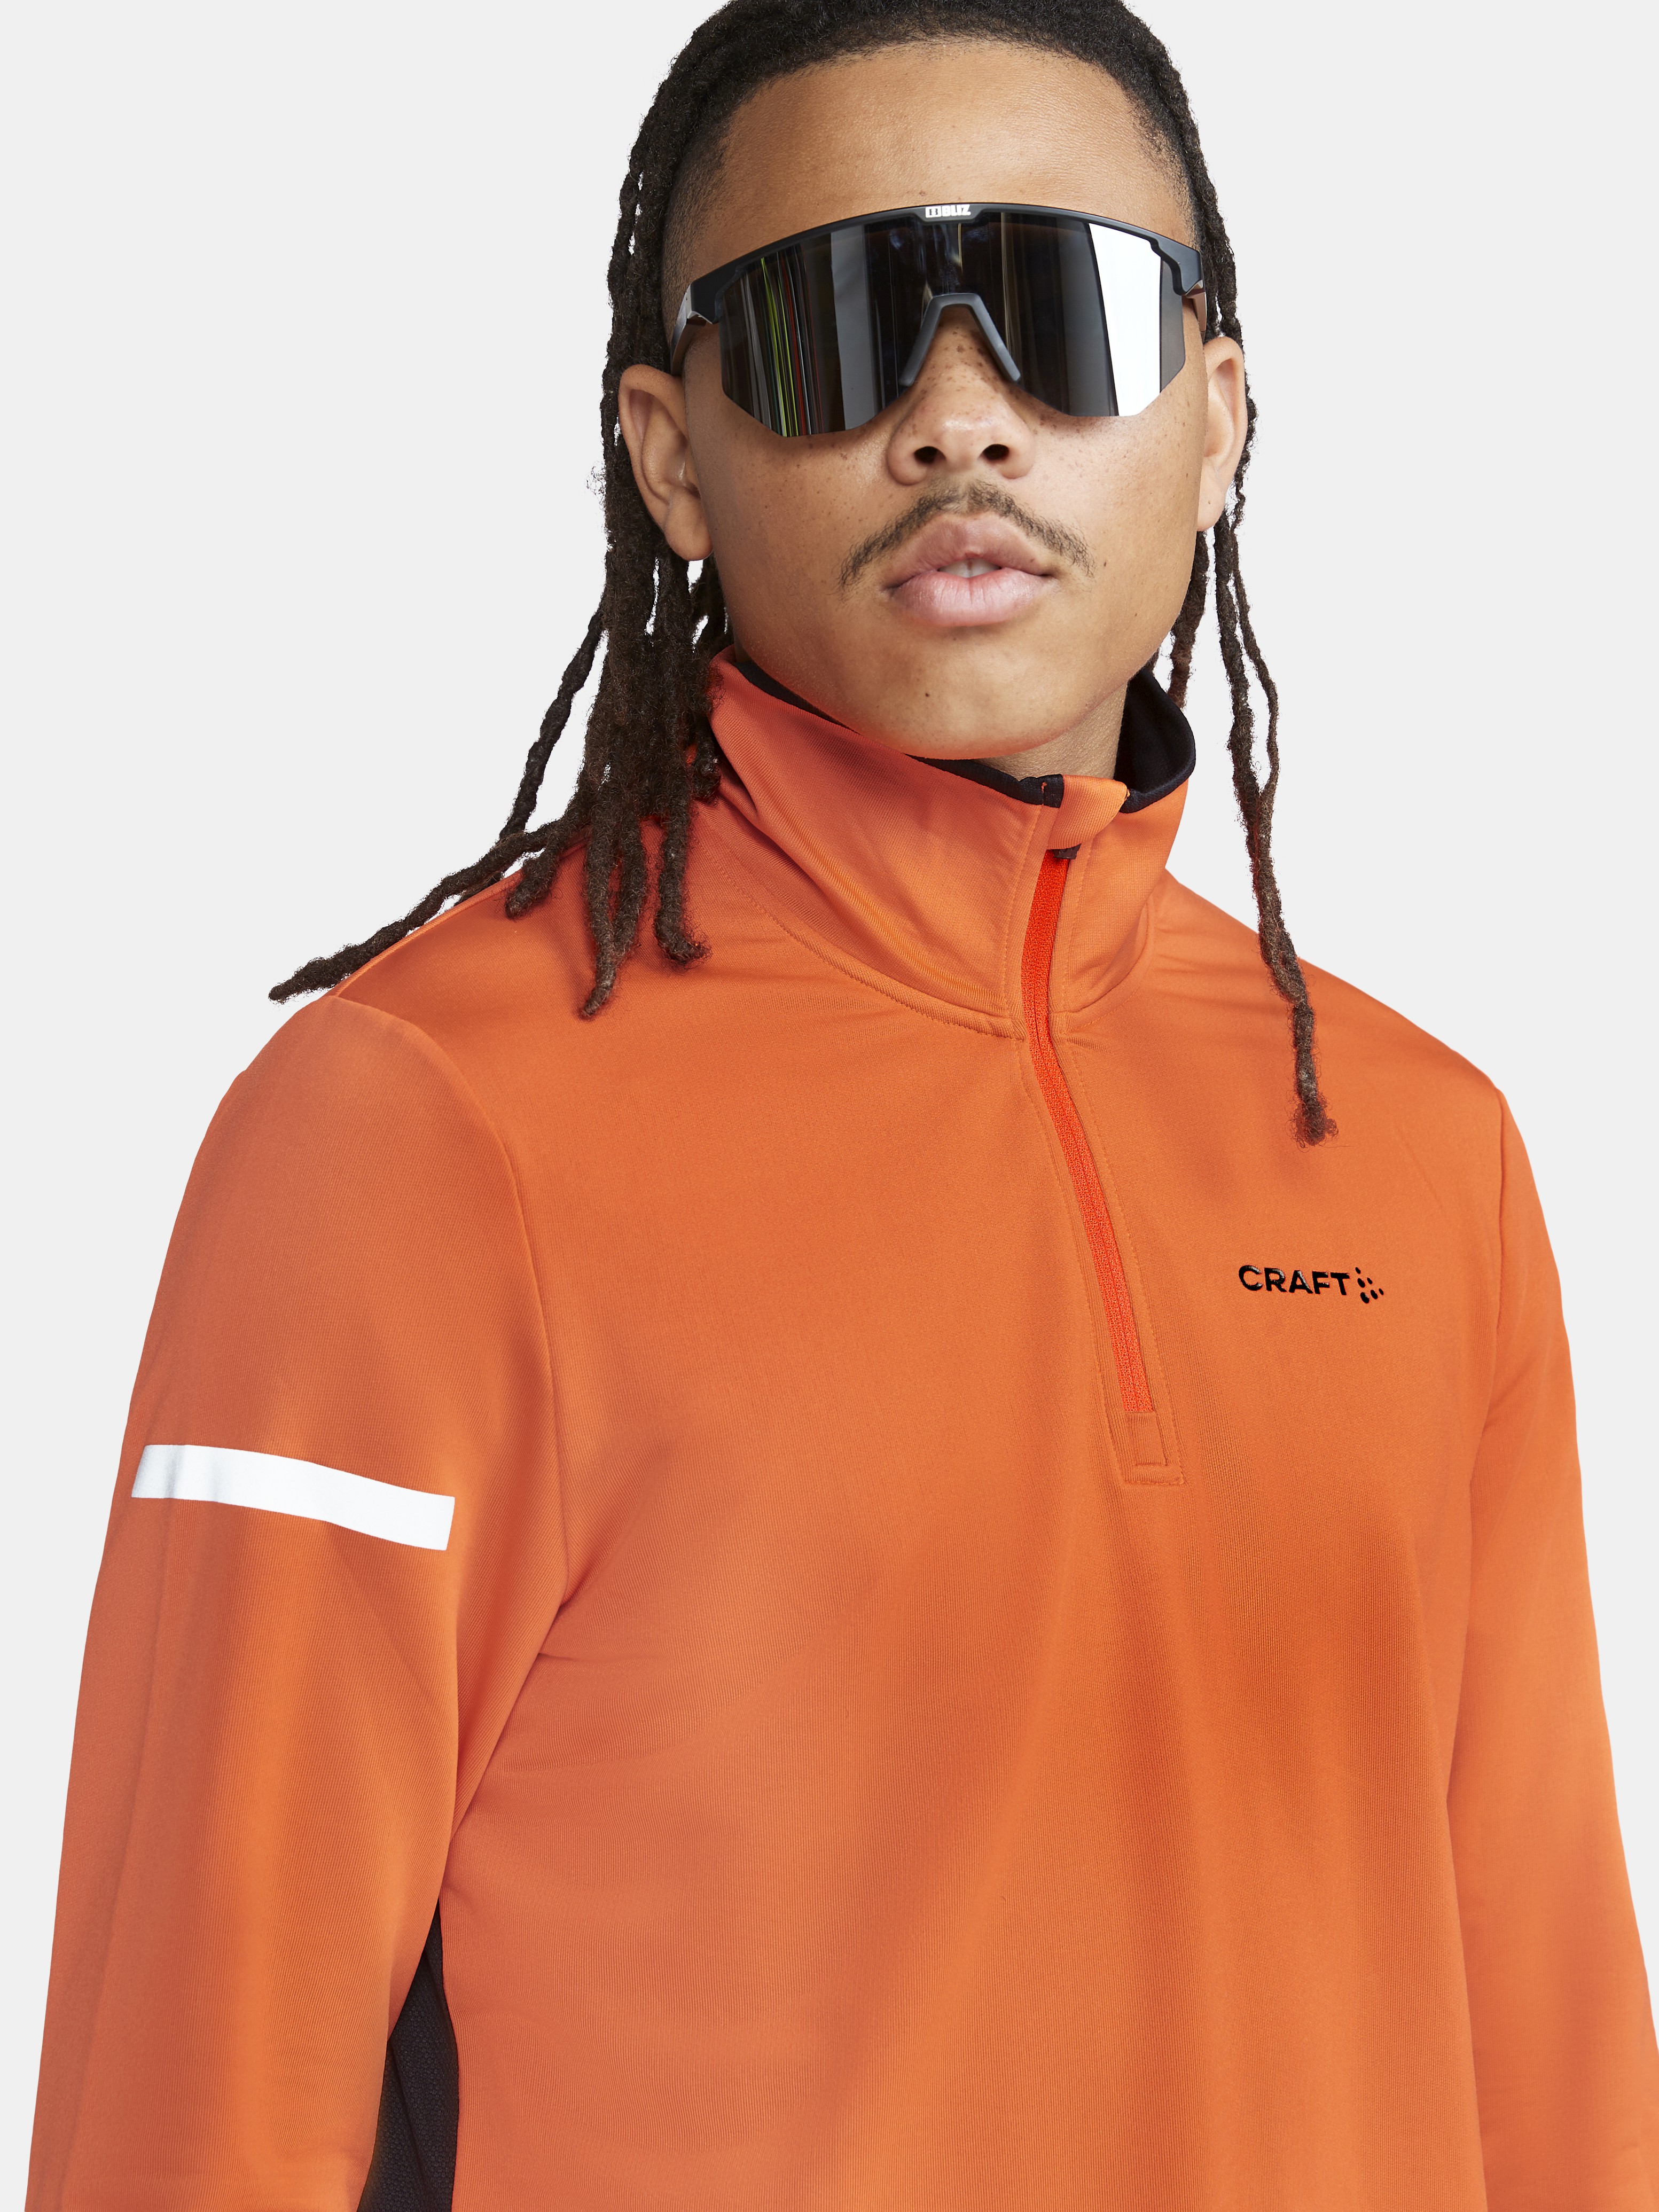 | ADV M 2 Sportswear Orange Craft - SubZ LS